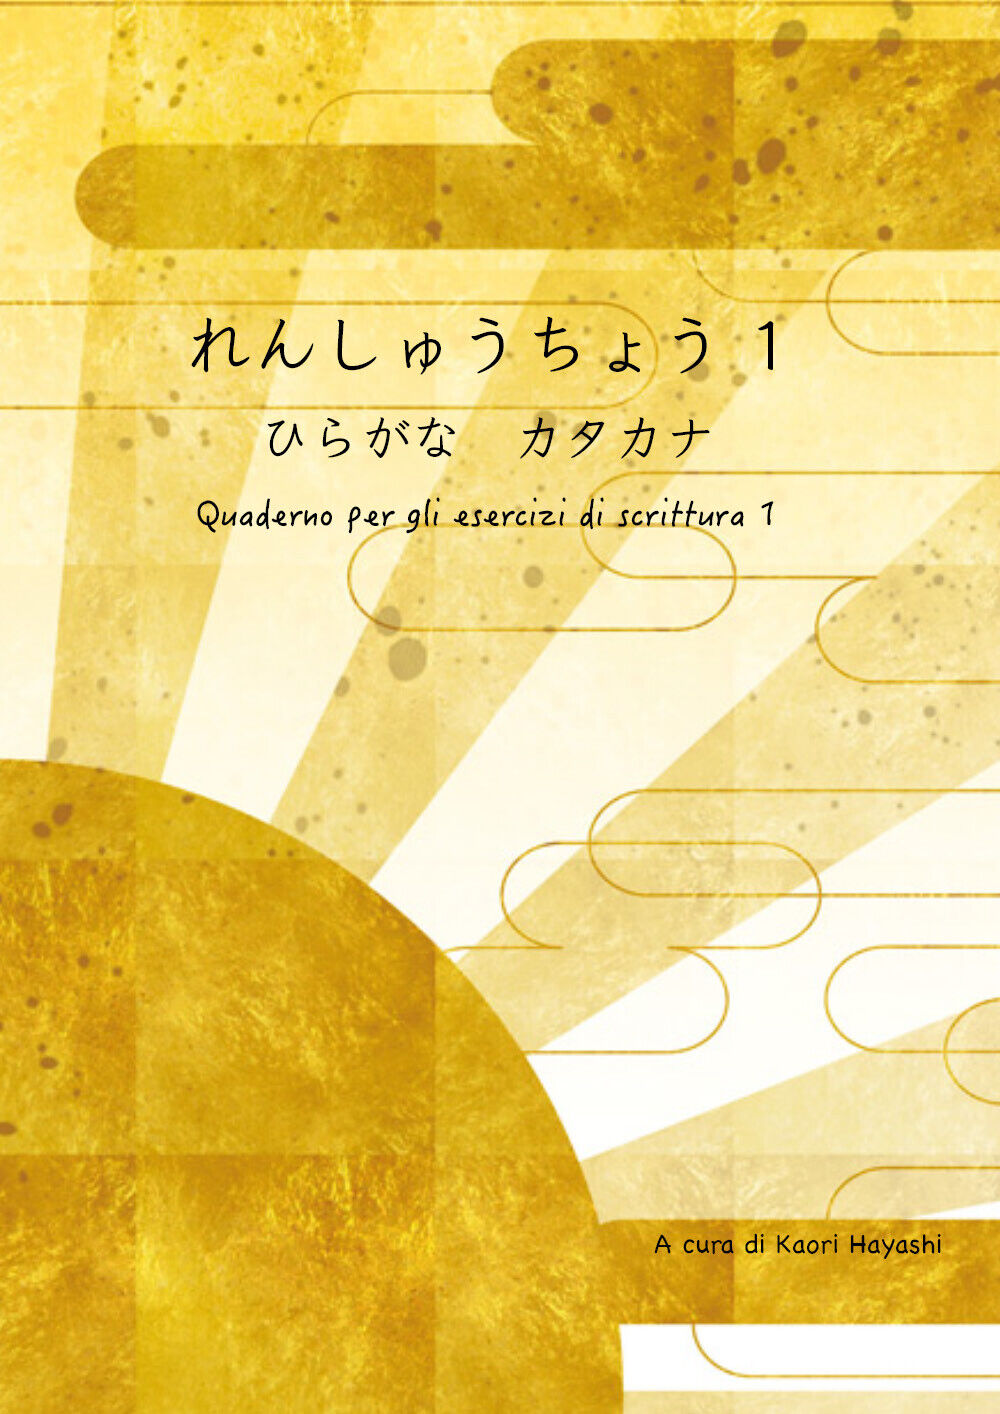 Quaderno per gli esercizi di scrittura 1 di Kaori Hayashi,  2021,  Youcanprint